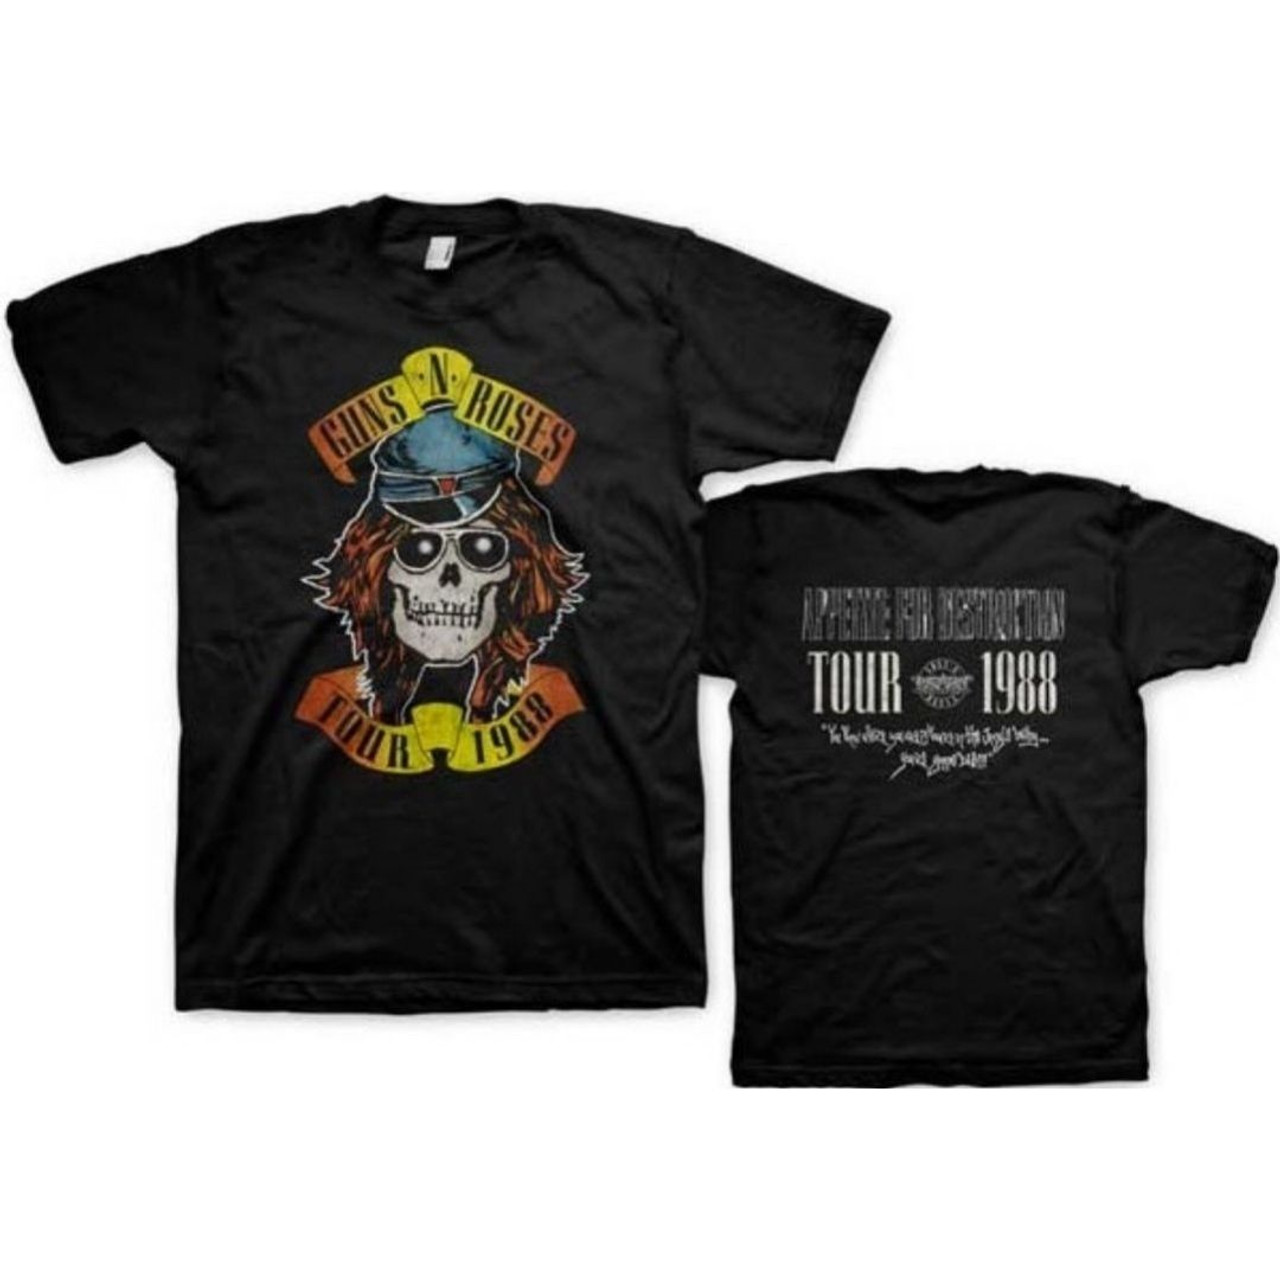 Alabama Falde sammen Refinement Guns N Roses Concert T-shirt Appetite for Destruction Tour Men's Black